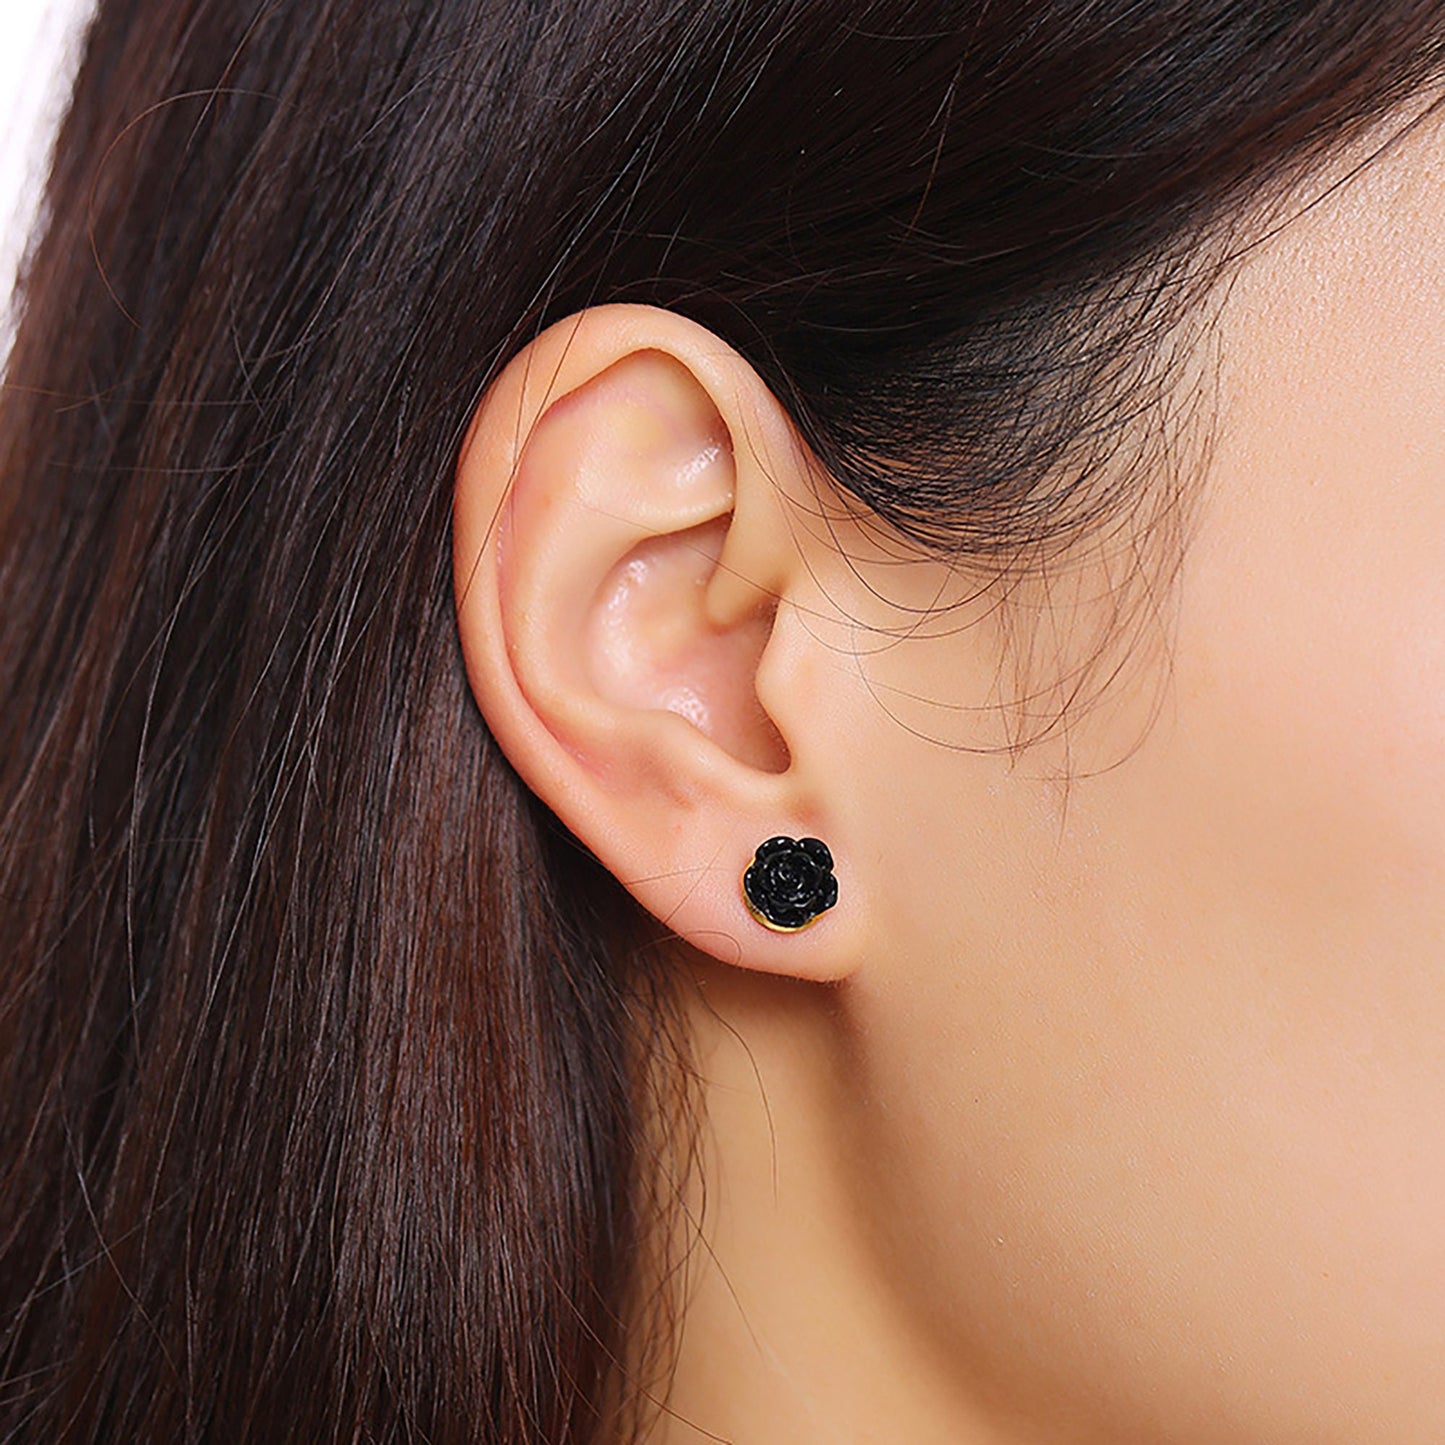 Titanium Rose Stud Earrings, Black White Flower, Screw Back Non Tarnish Earrings, Implant Grade Titanium Waterproof Earrings, Minimalist